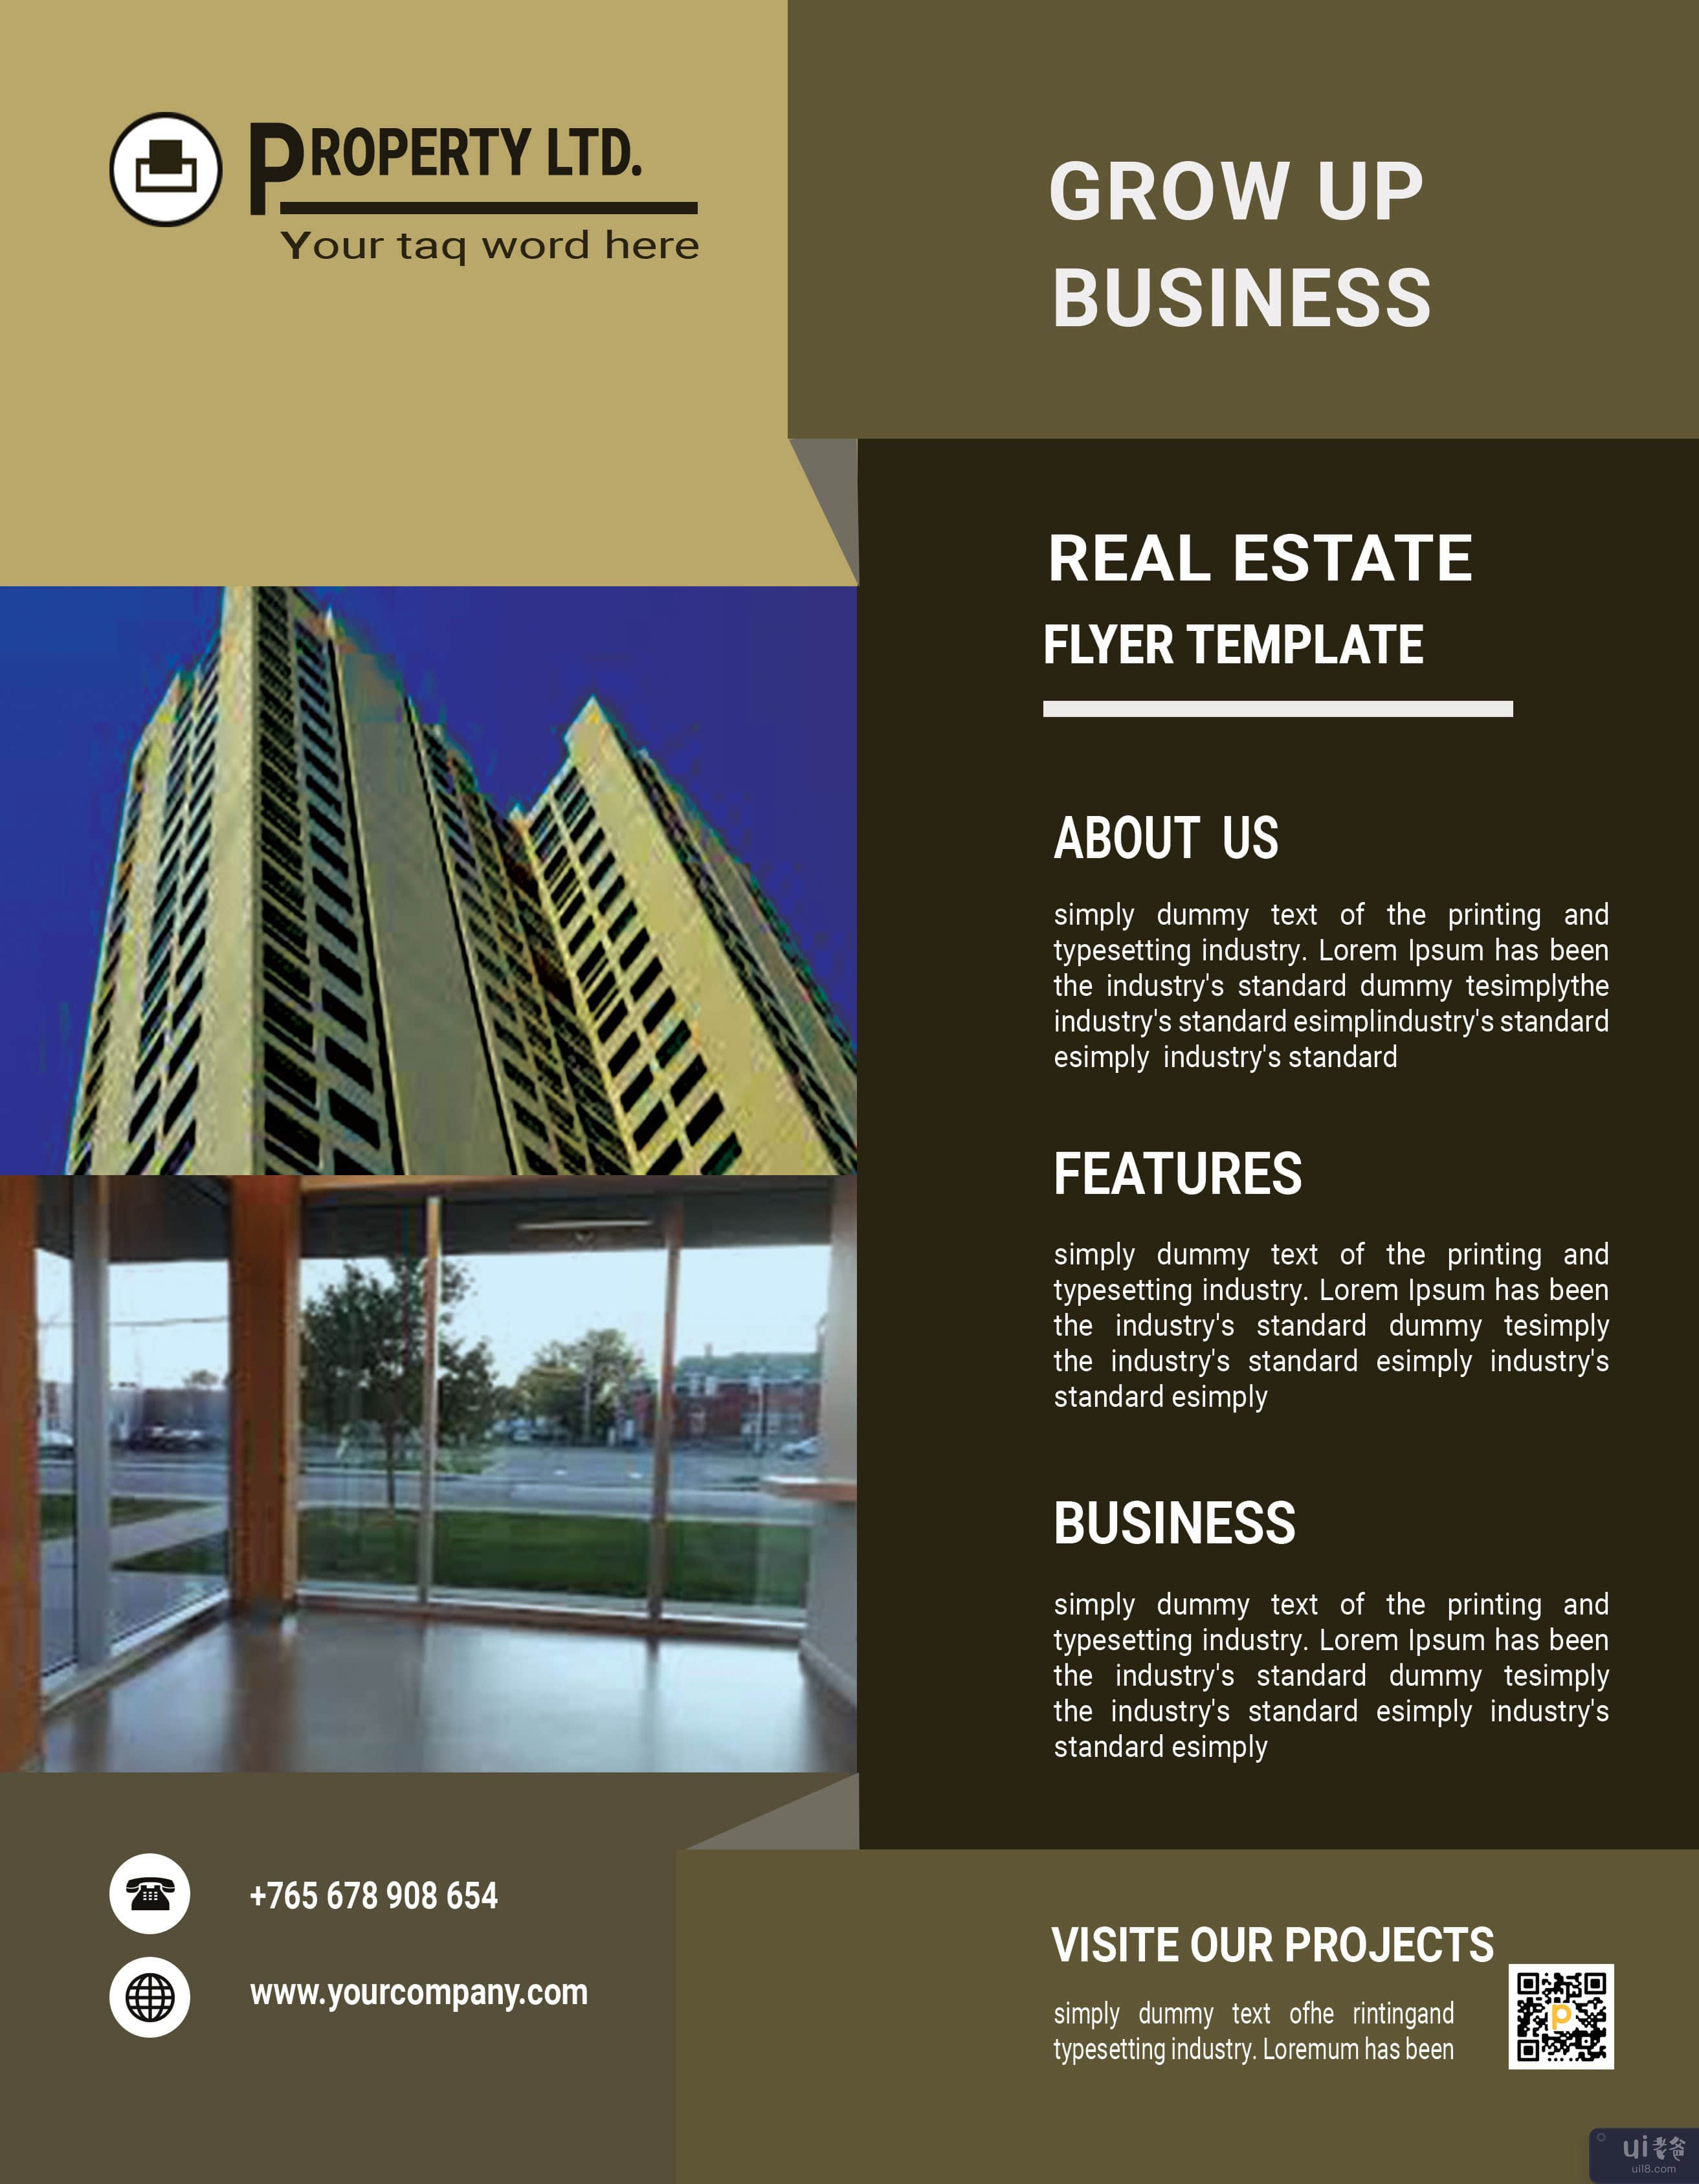 优雅的企业房地产传单模板(Elegant Corporate Real Estate Flyer Template)插图1